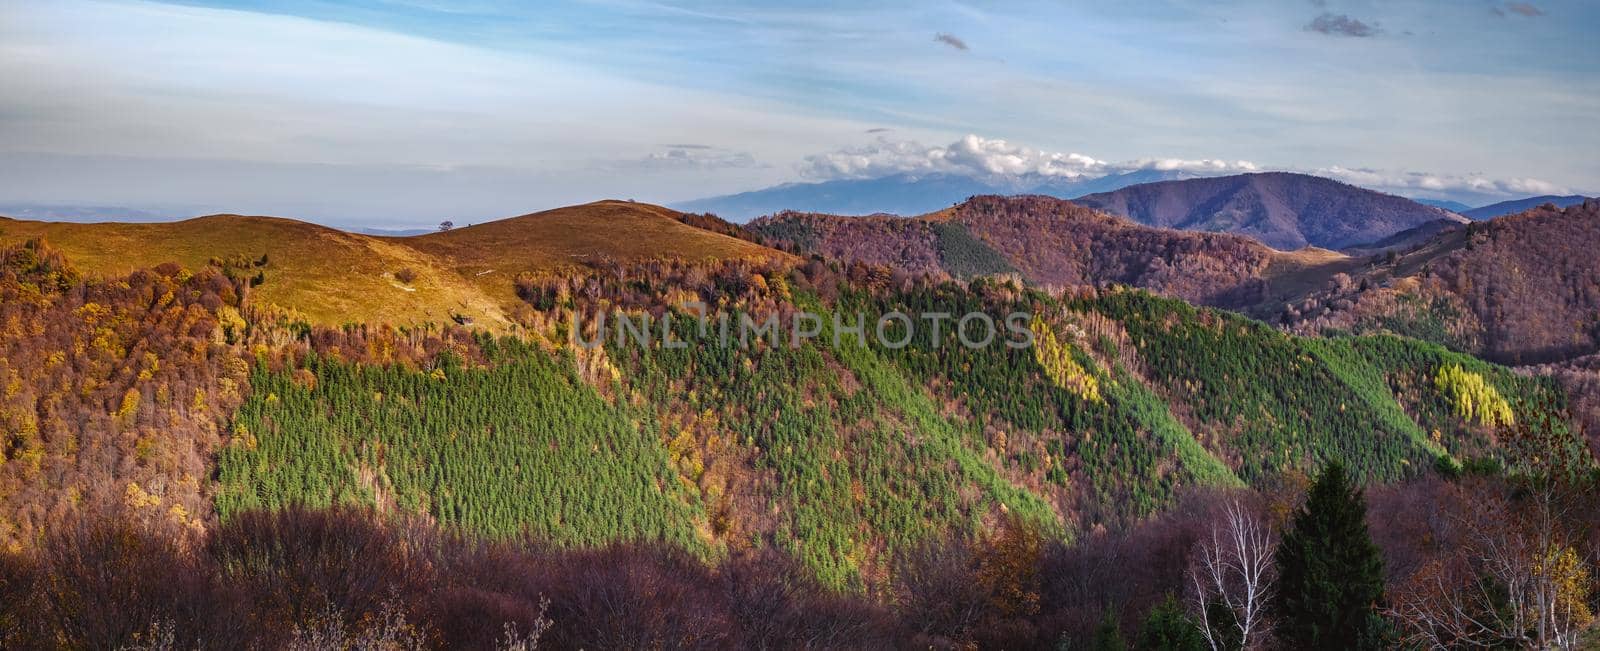 Mountains in the fall season, Paltinis area, Sibiu county, Romania by Roberto